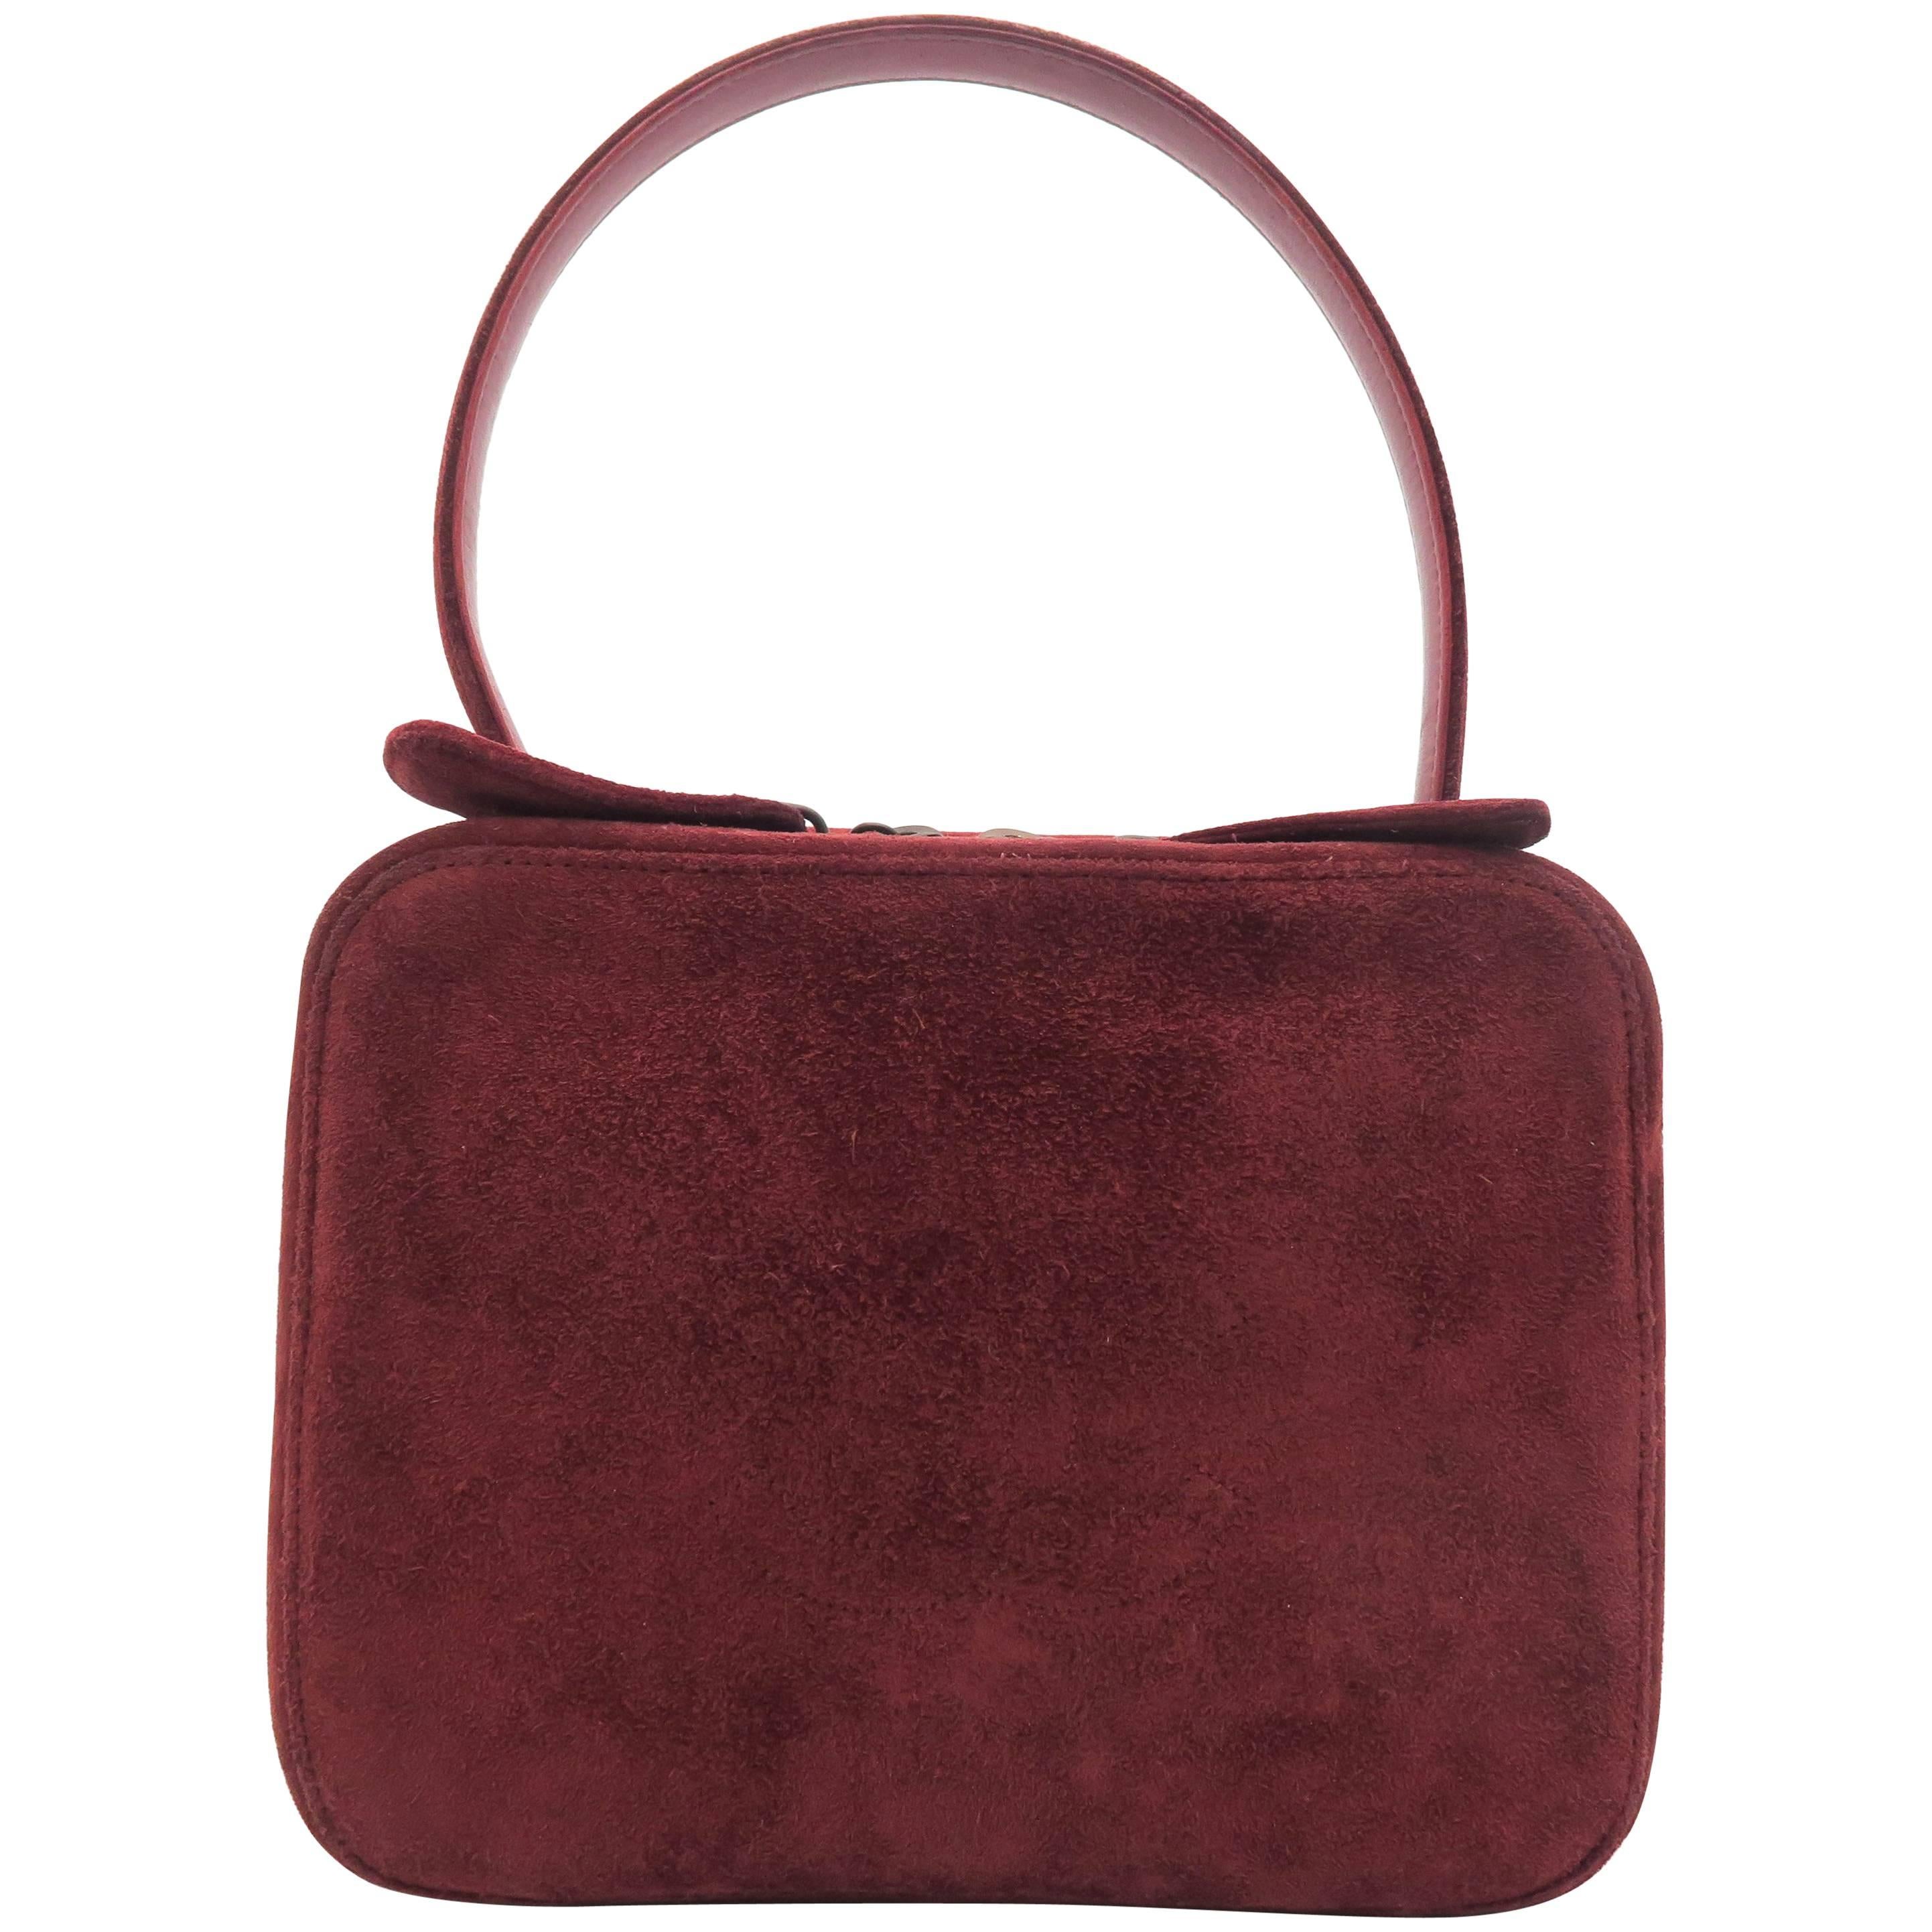 Chanel Red Suede Handbag For Sale